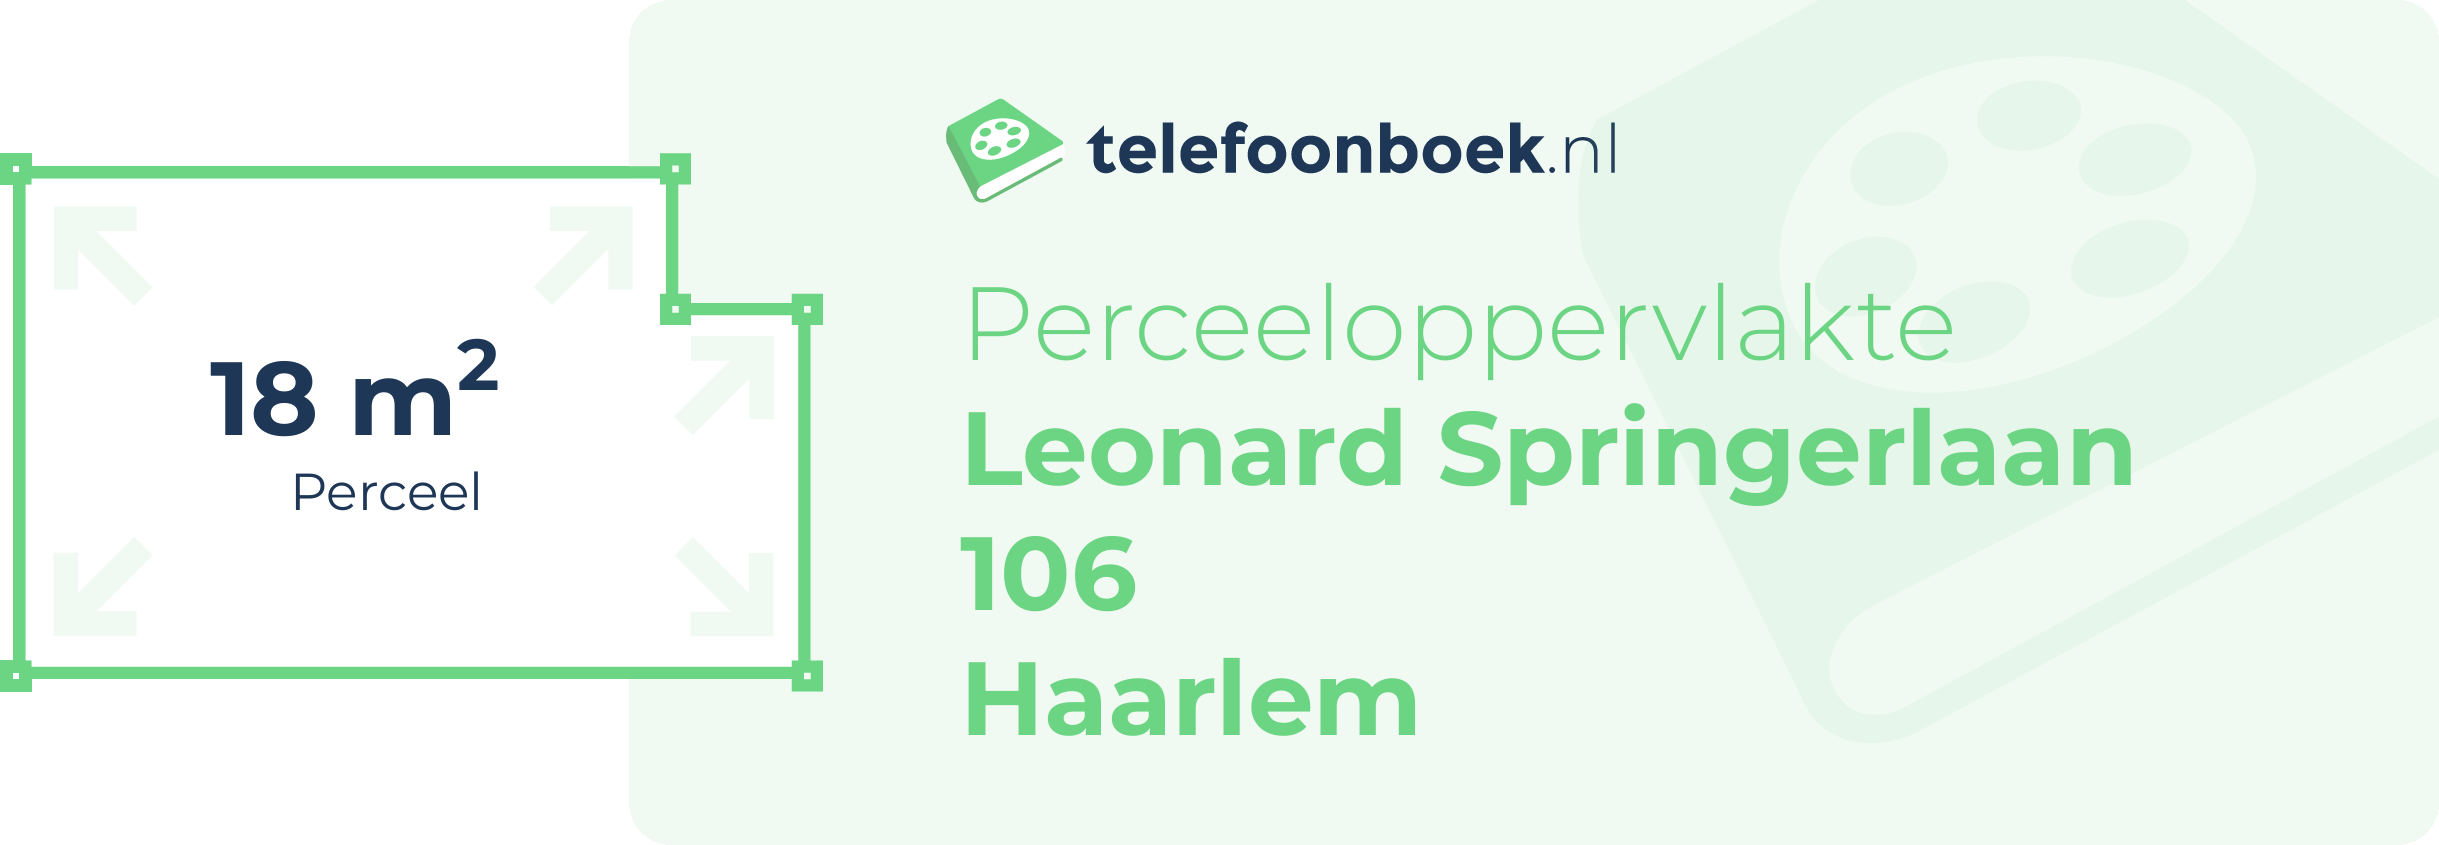 Perceeloppervlakte Leonard Springerlaan 106 Haarlem